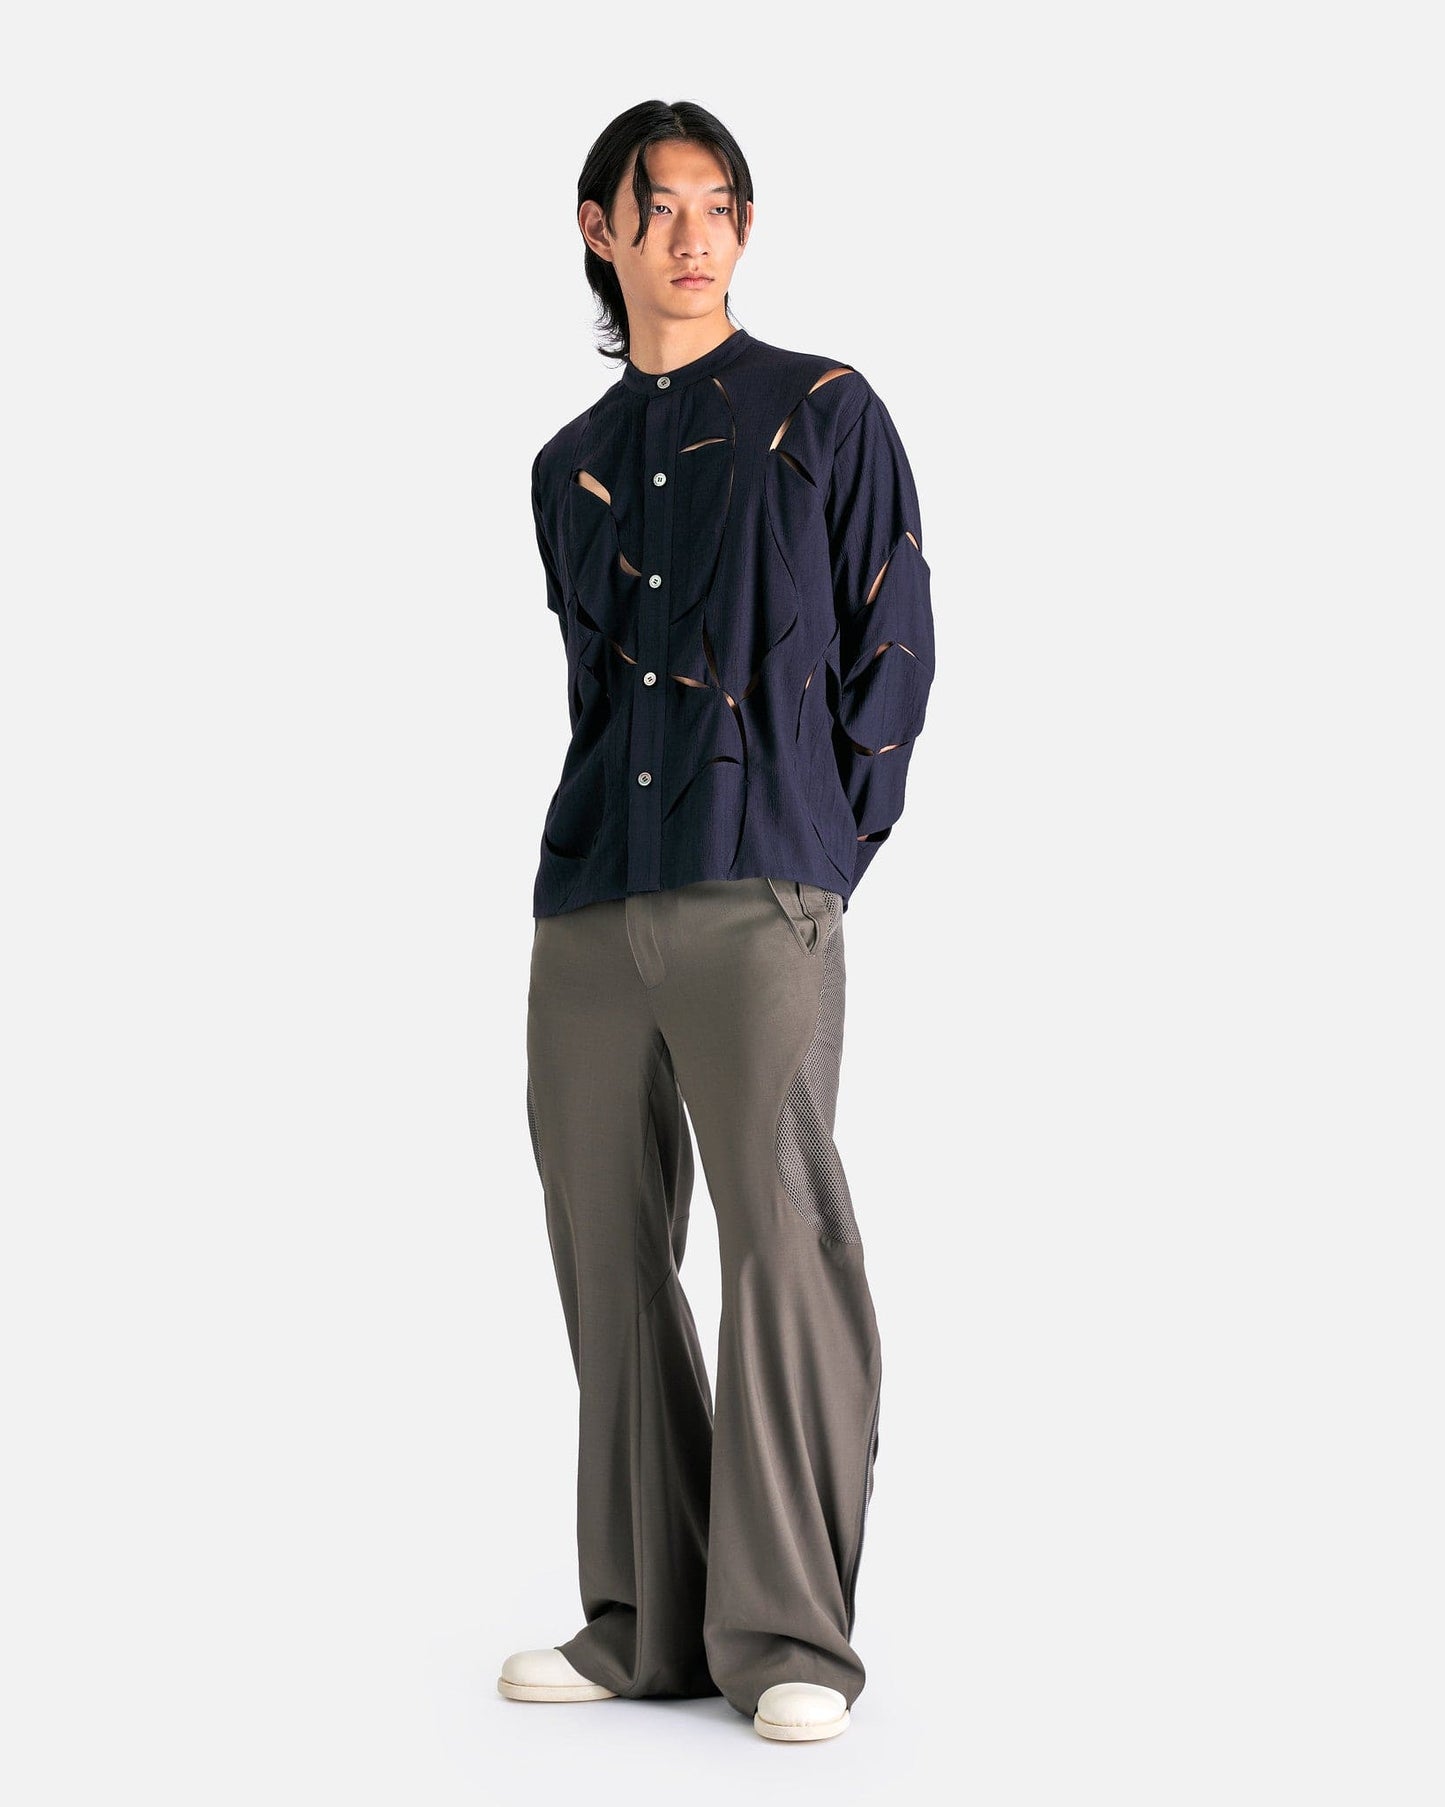 CMMAWEAR Men's Pants Articulated Back-Zip Trousers in Grey